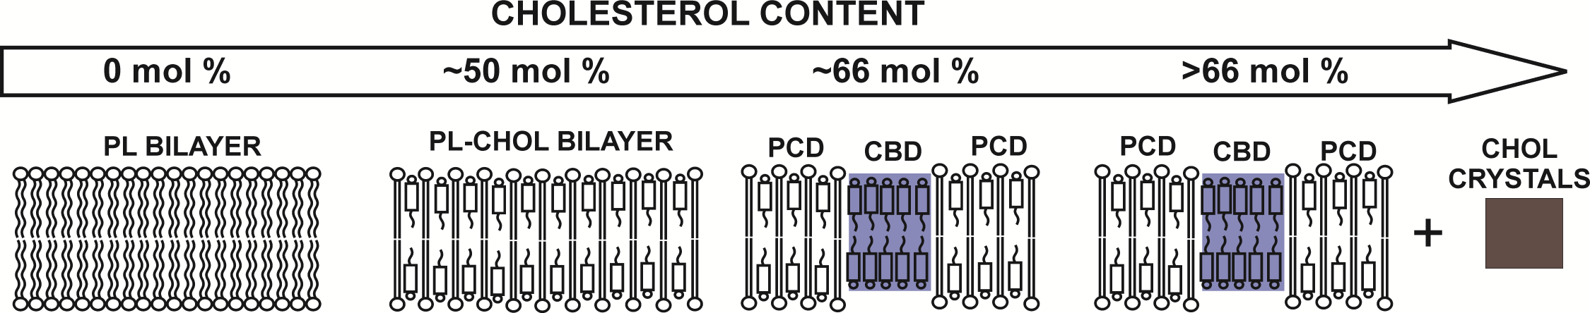 Cholesterol content at 0% mol in PL Bilayer, ~50% mol% in PL-CHOL Bilayer, ~66 mol%, >66 mol %